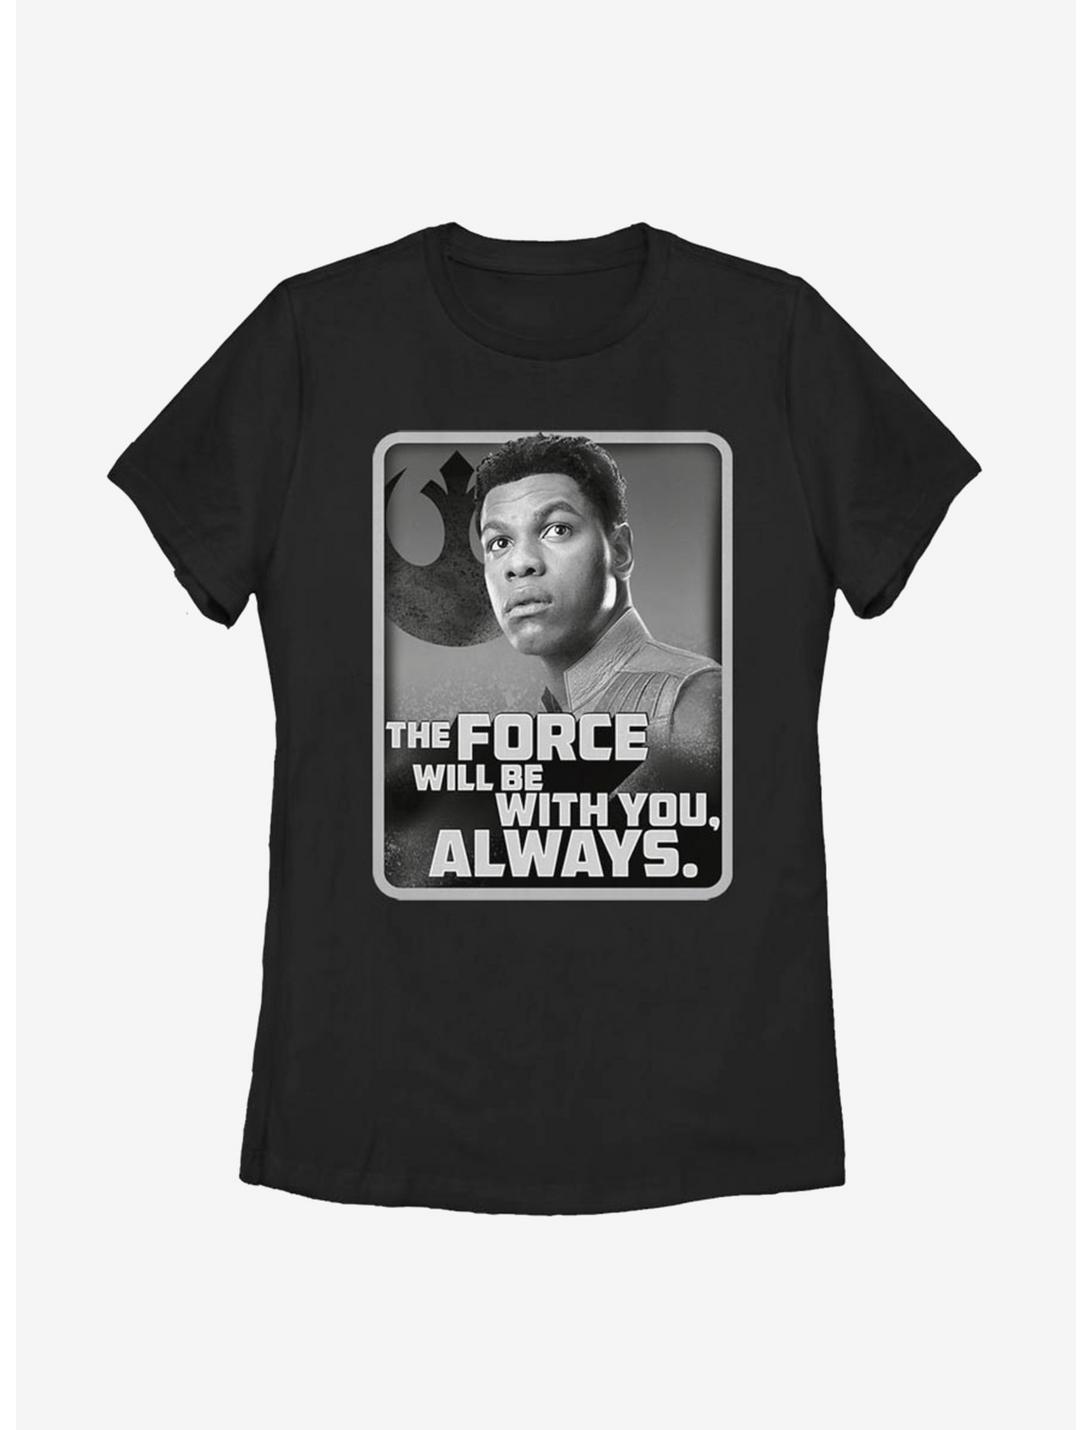 Star Wars Episode IX The Rise Of Skywalker With You Finn Womens T-Shirt, BLACK, hi-res